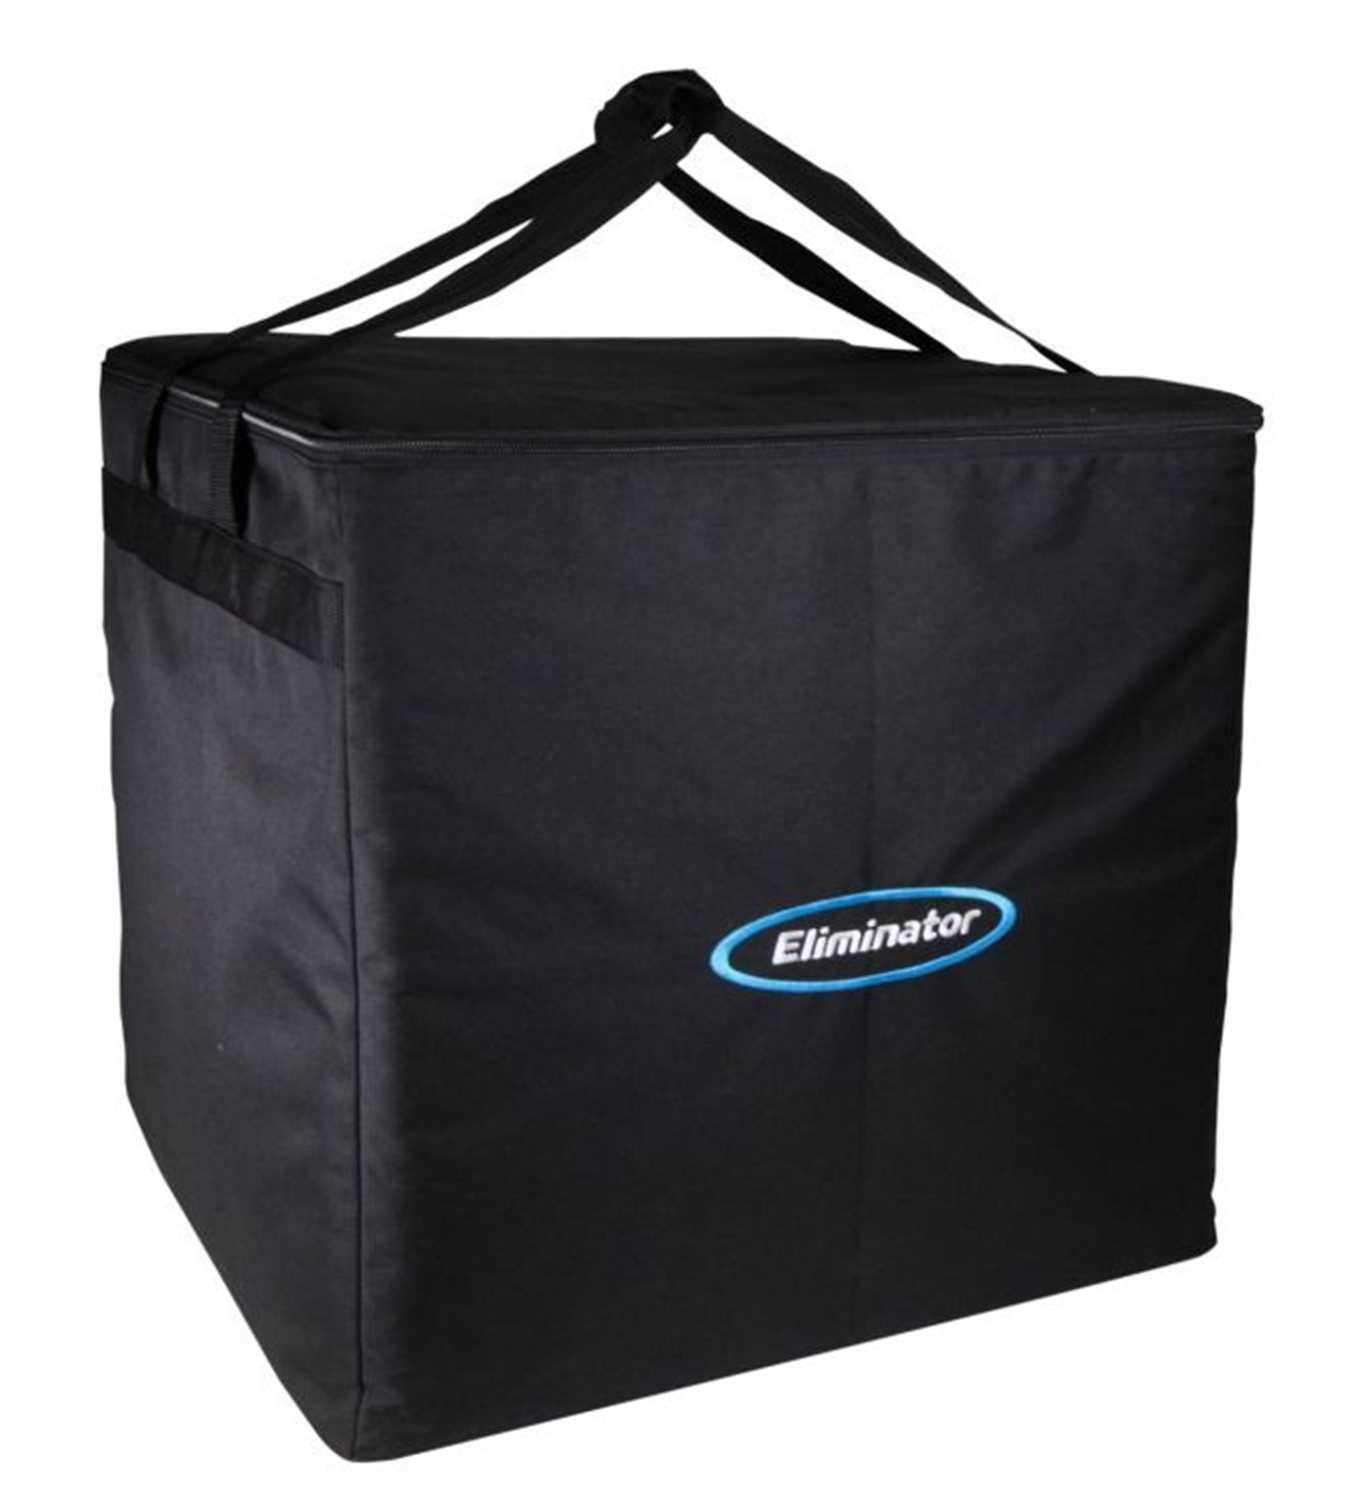 Eliminator Large Event Bag for Lighting Equipment - ProSound and Stage Lighting